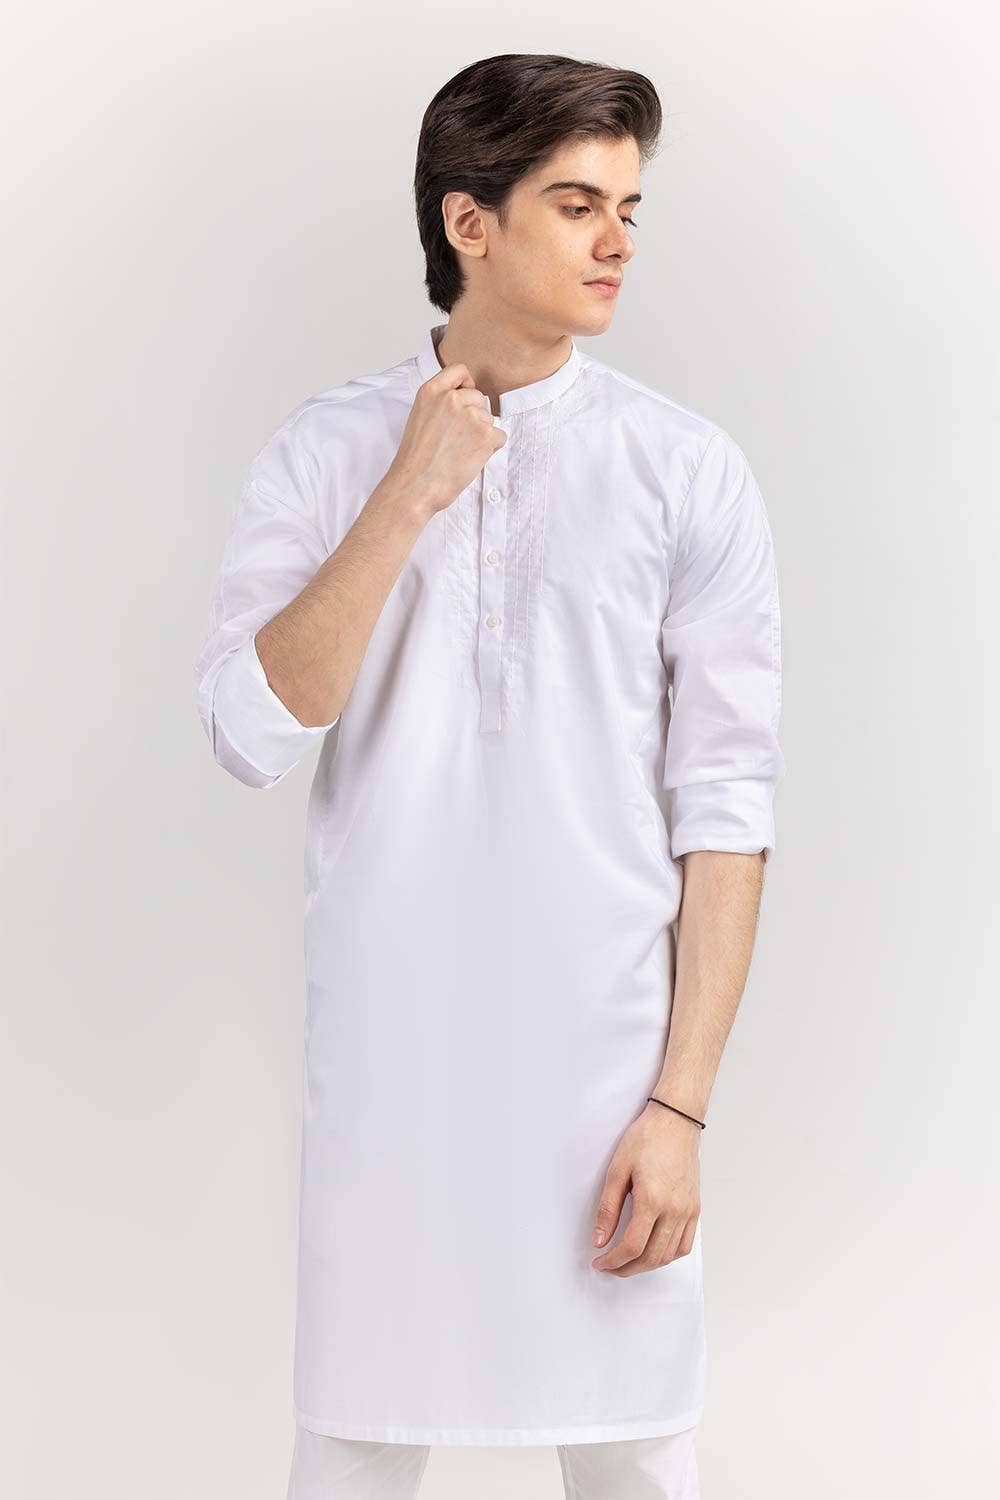 Gul Ahmed Ready to Wear White Basic Kurta KR-EMB22-007